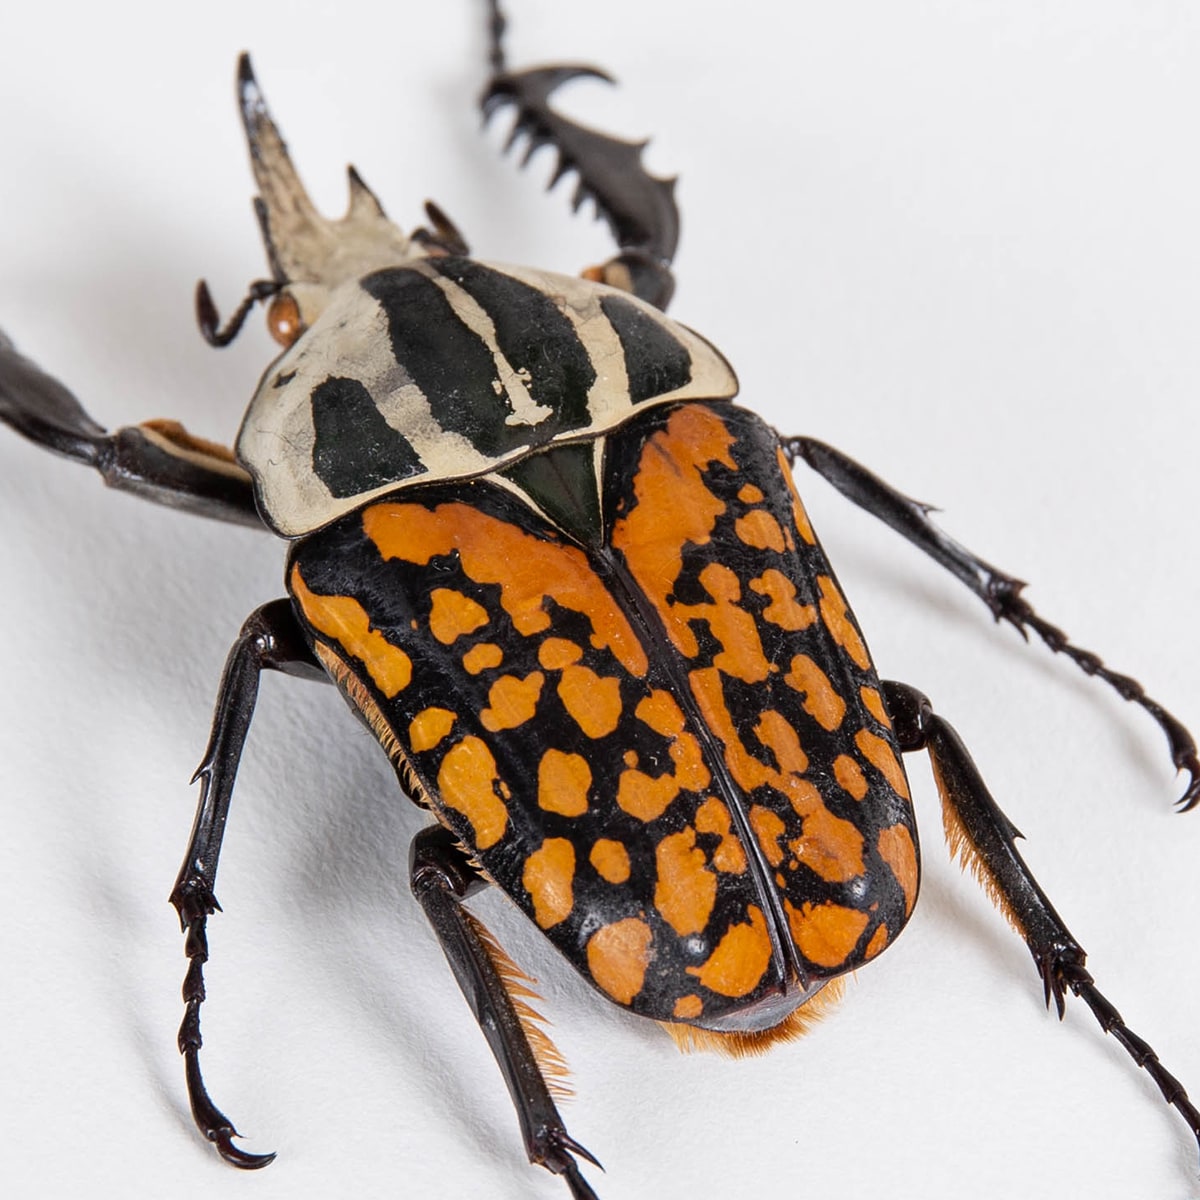 African Flower Beetle in Box Frame (Mecynorrhina oberthuri decorata)